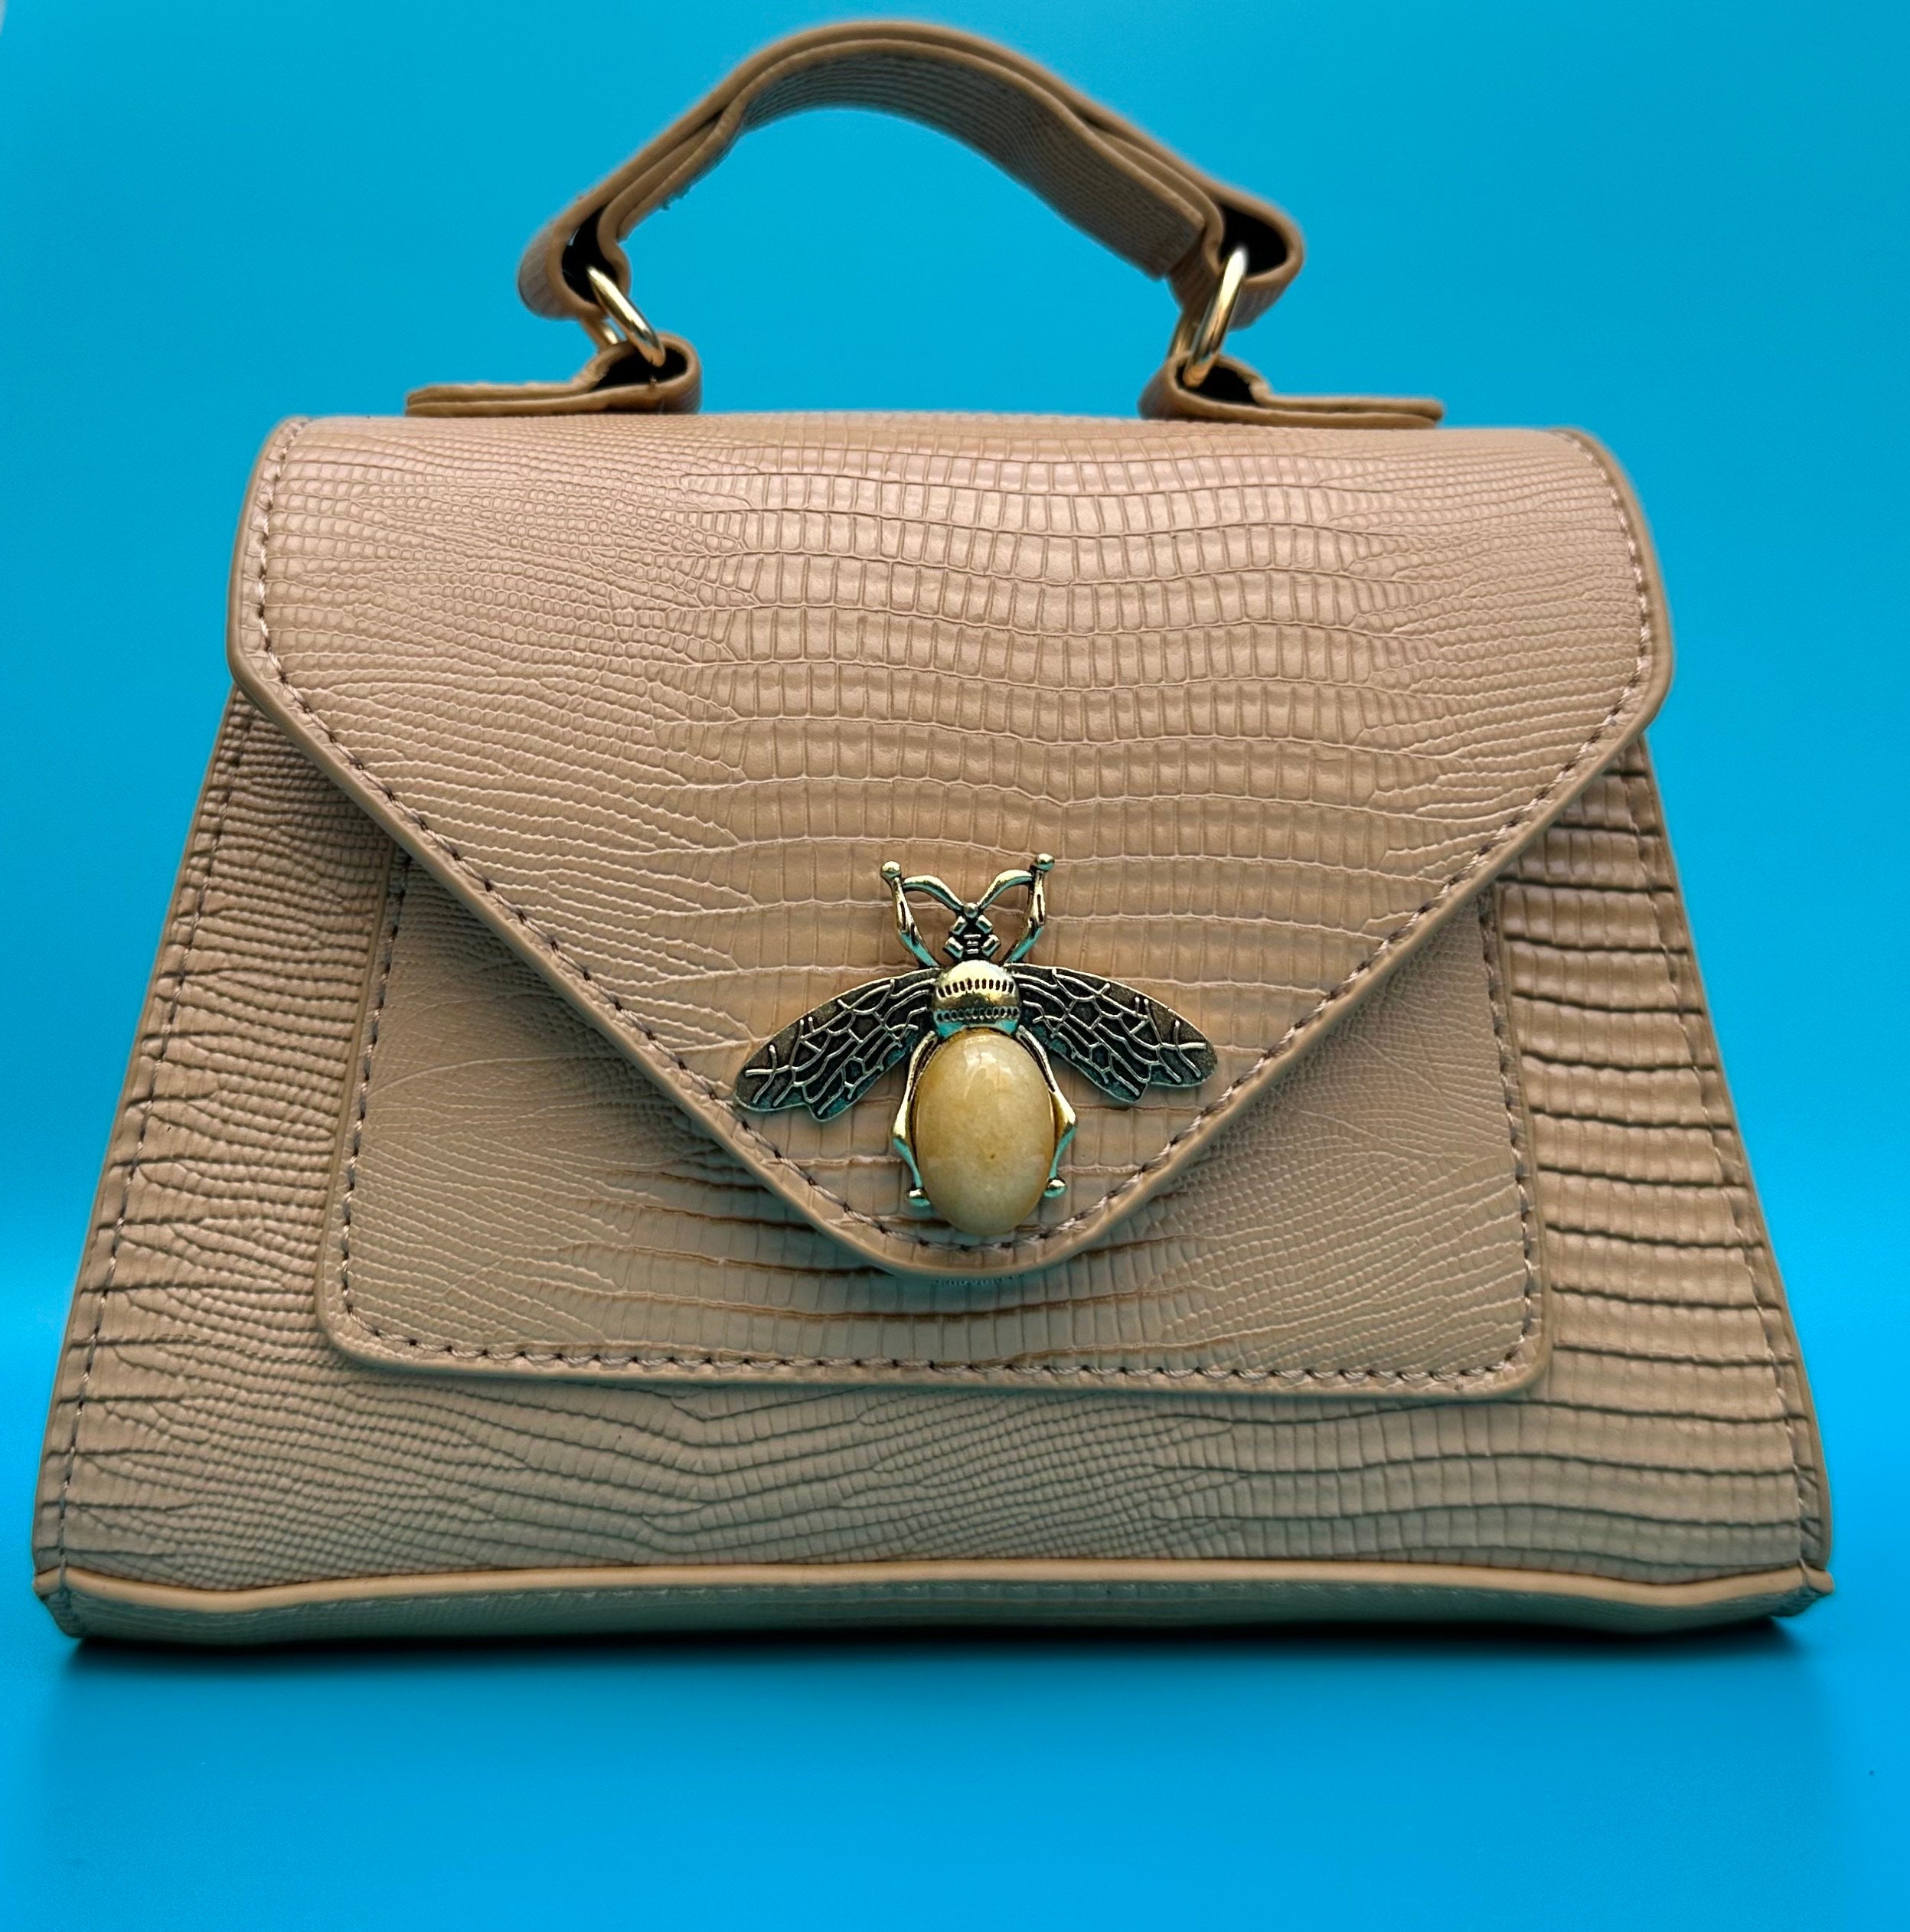 Finally got my nude/beige evening bag! : r/handbags